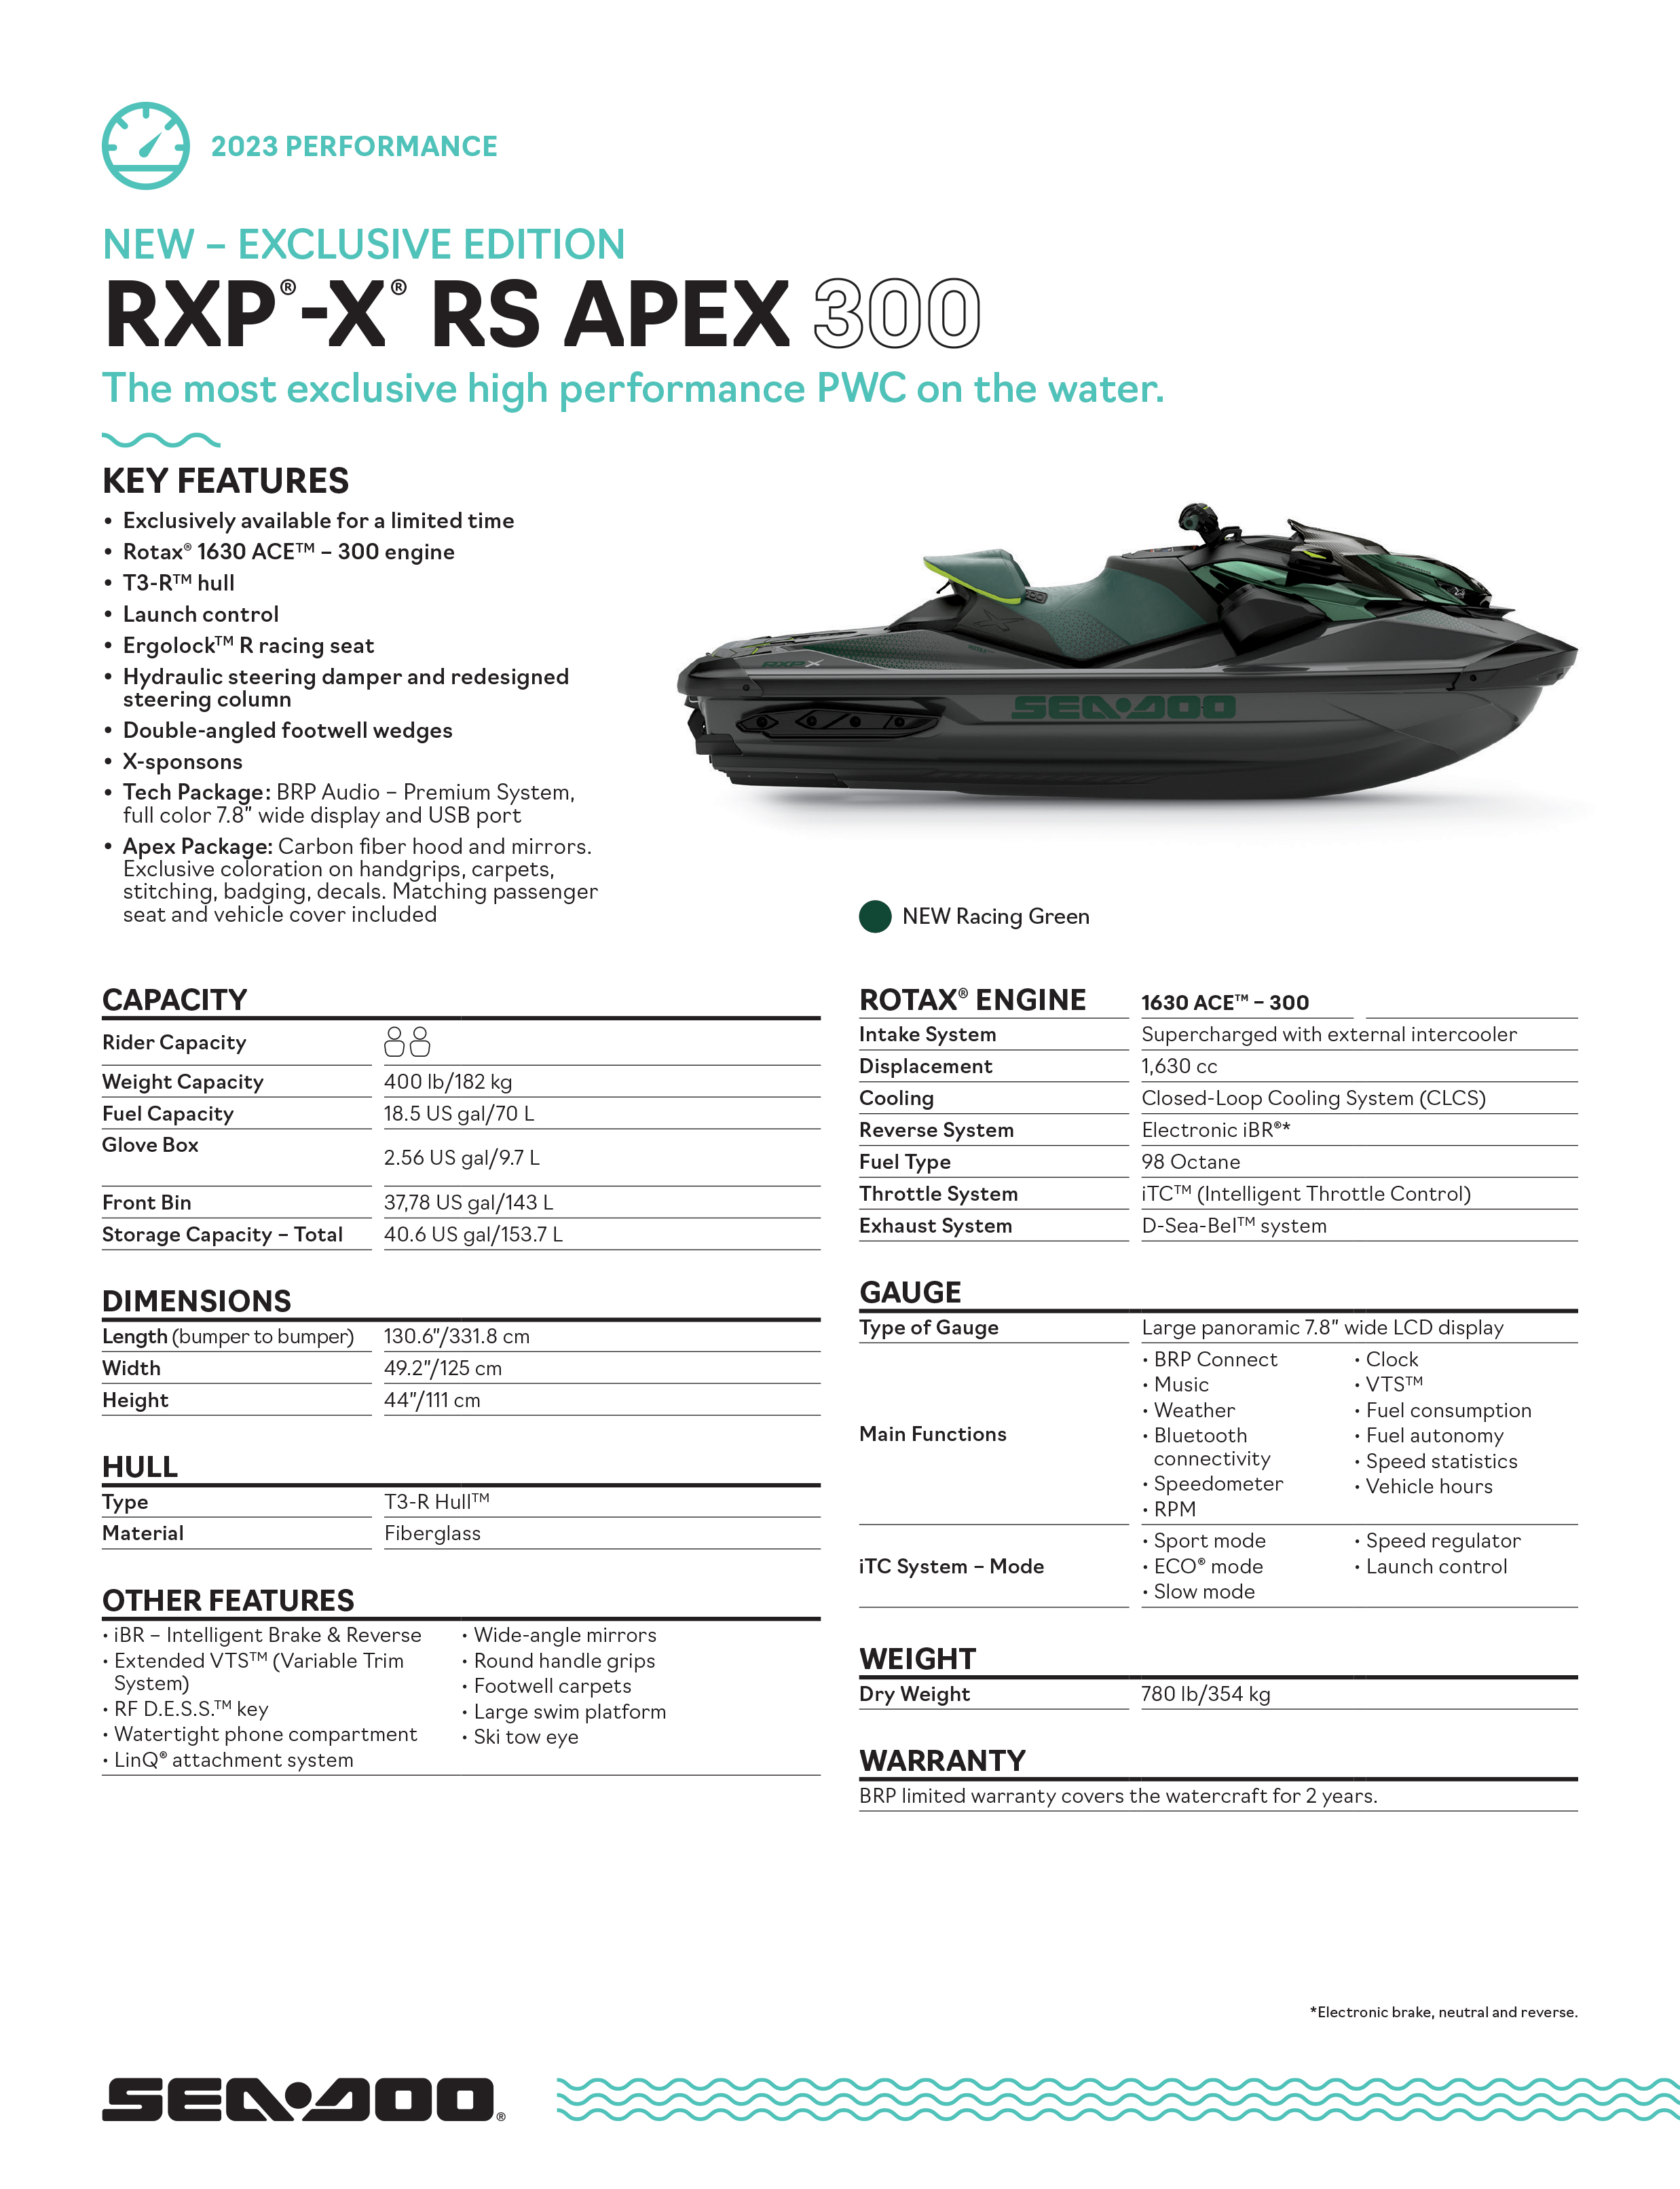 SeaDoo RXPX Apex 300 2023